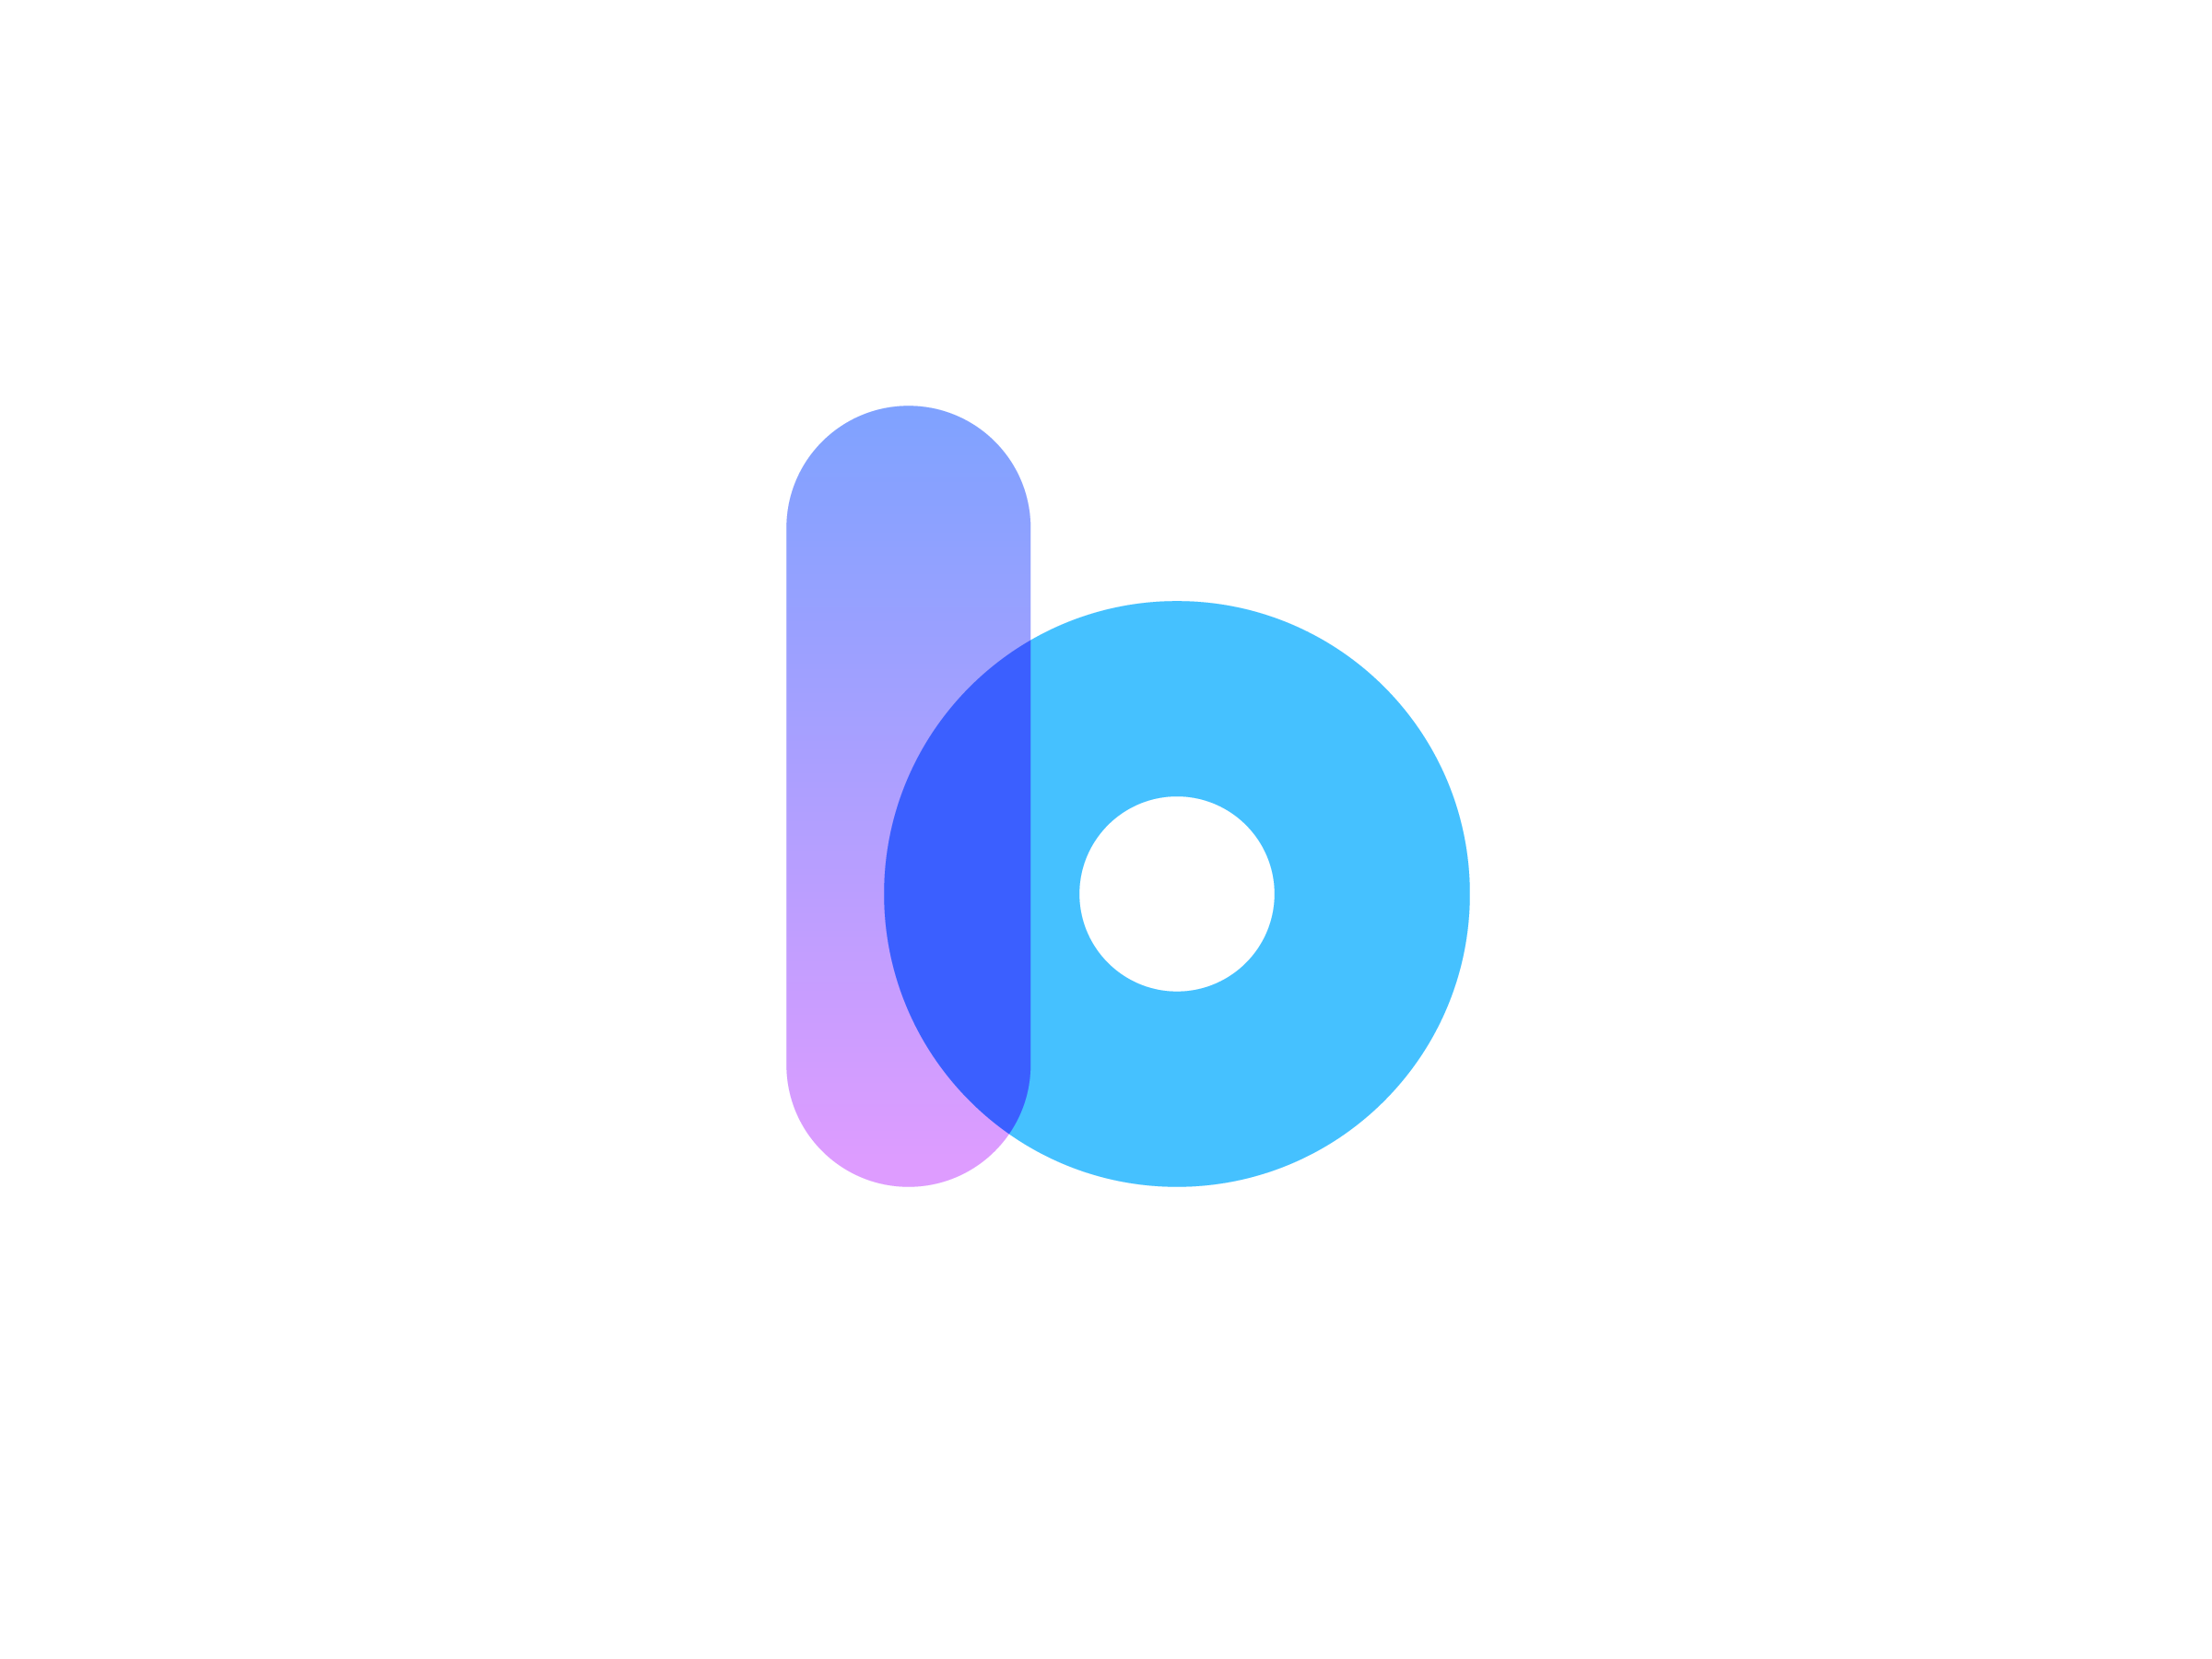 Transparent B Logo Concept // For SALE